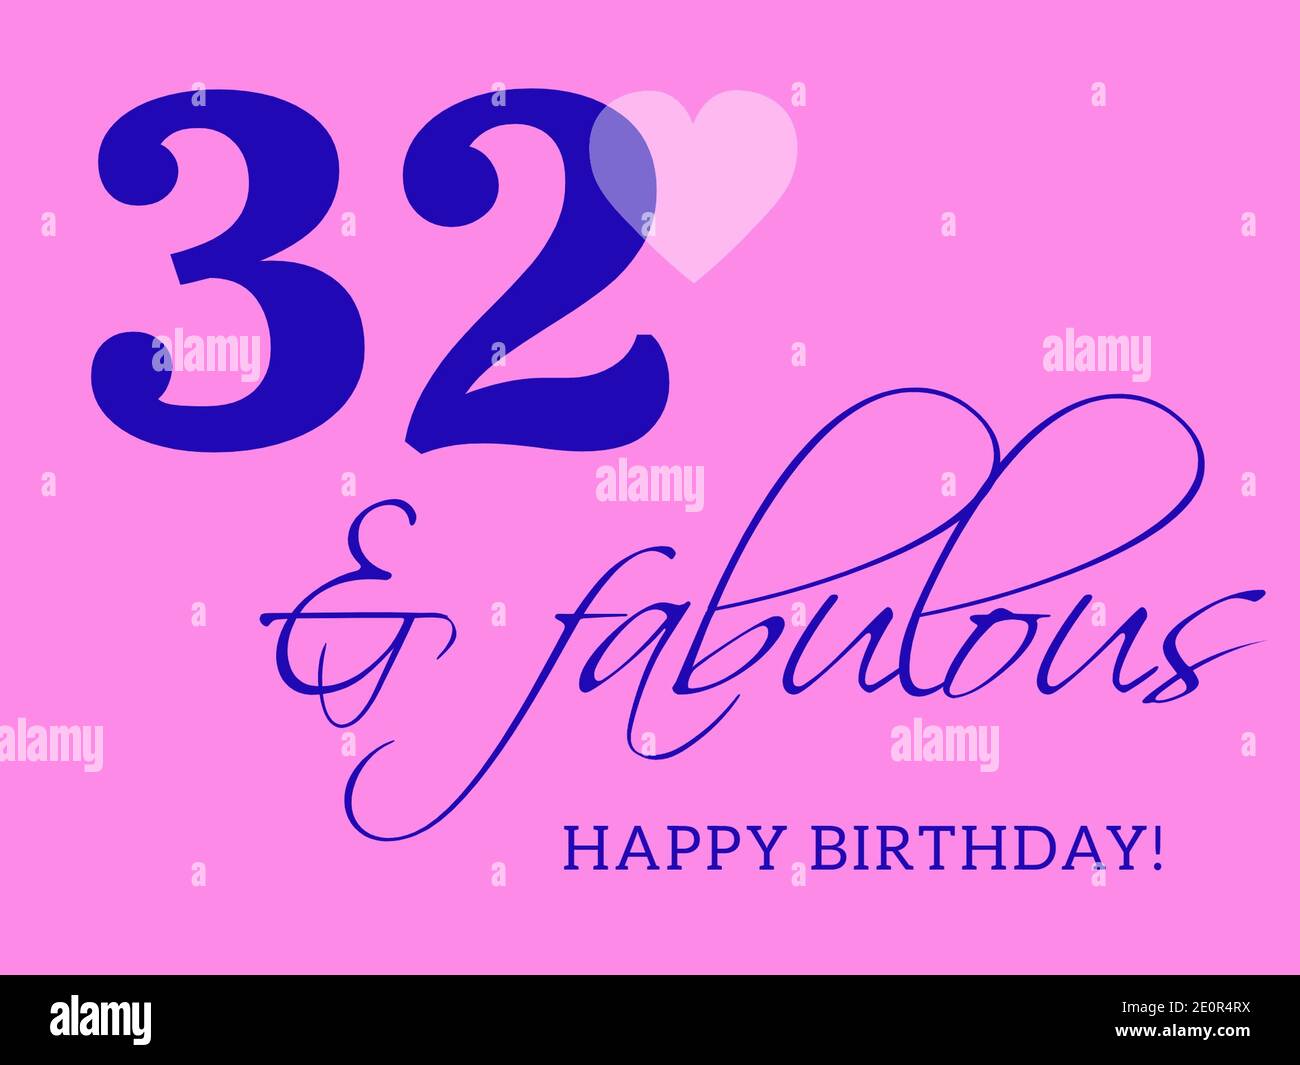 32nd happy birthday card illustration in retro style. Stock Photo